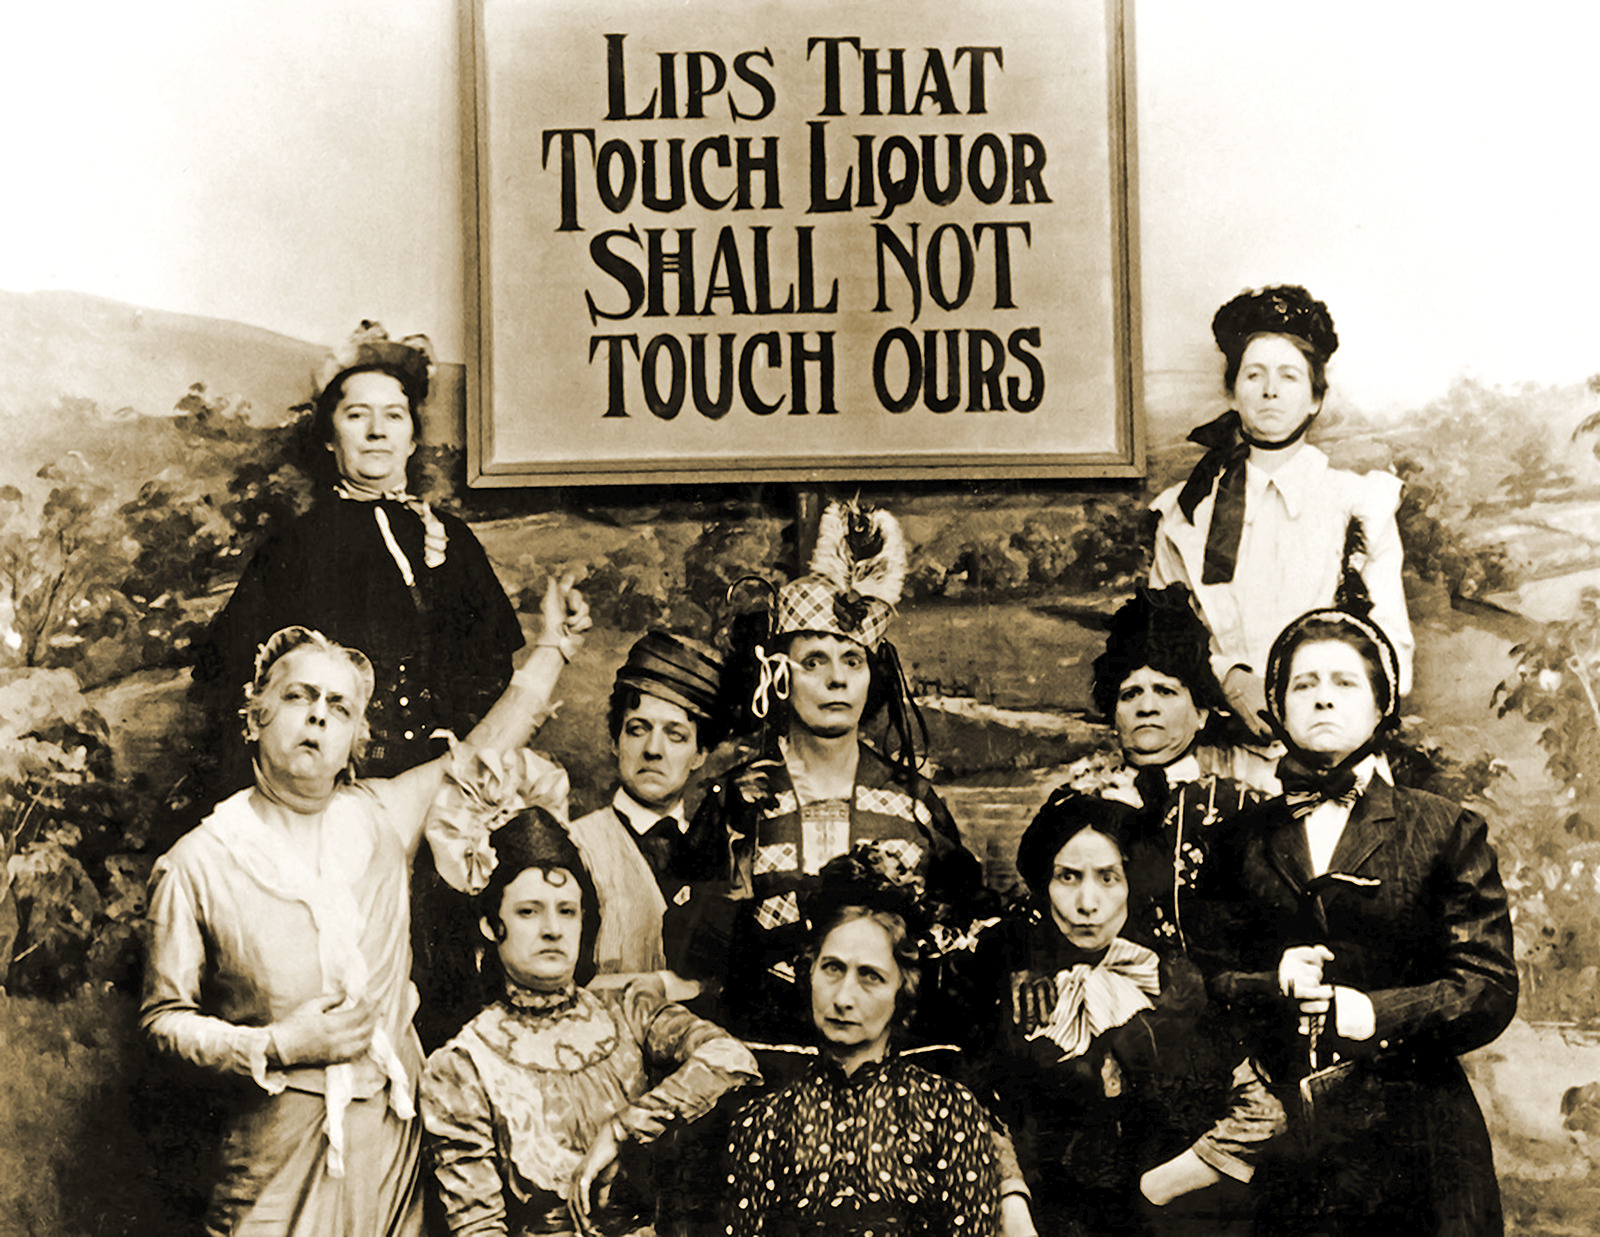 1901 Lips That Touch Liquor Prohibition Vintage Old Photo drunk 11 x 17 Reprint